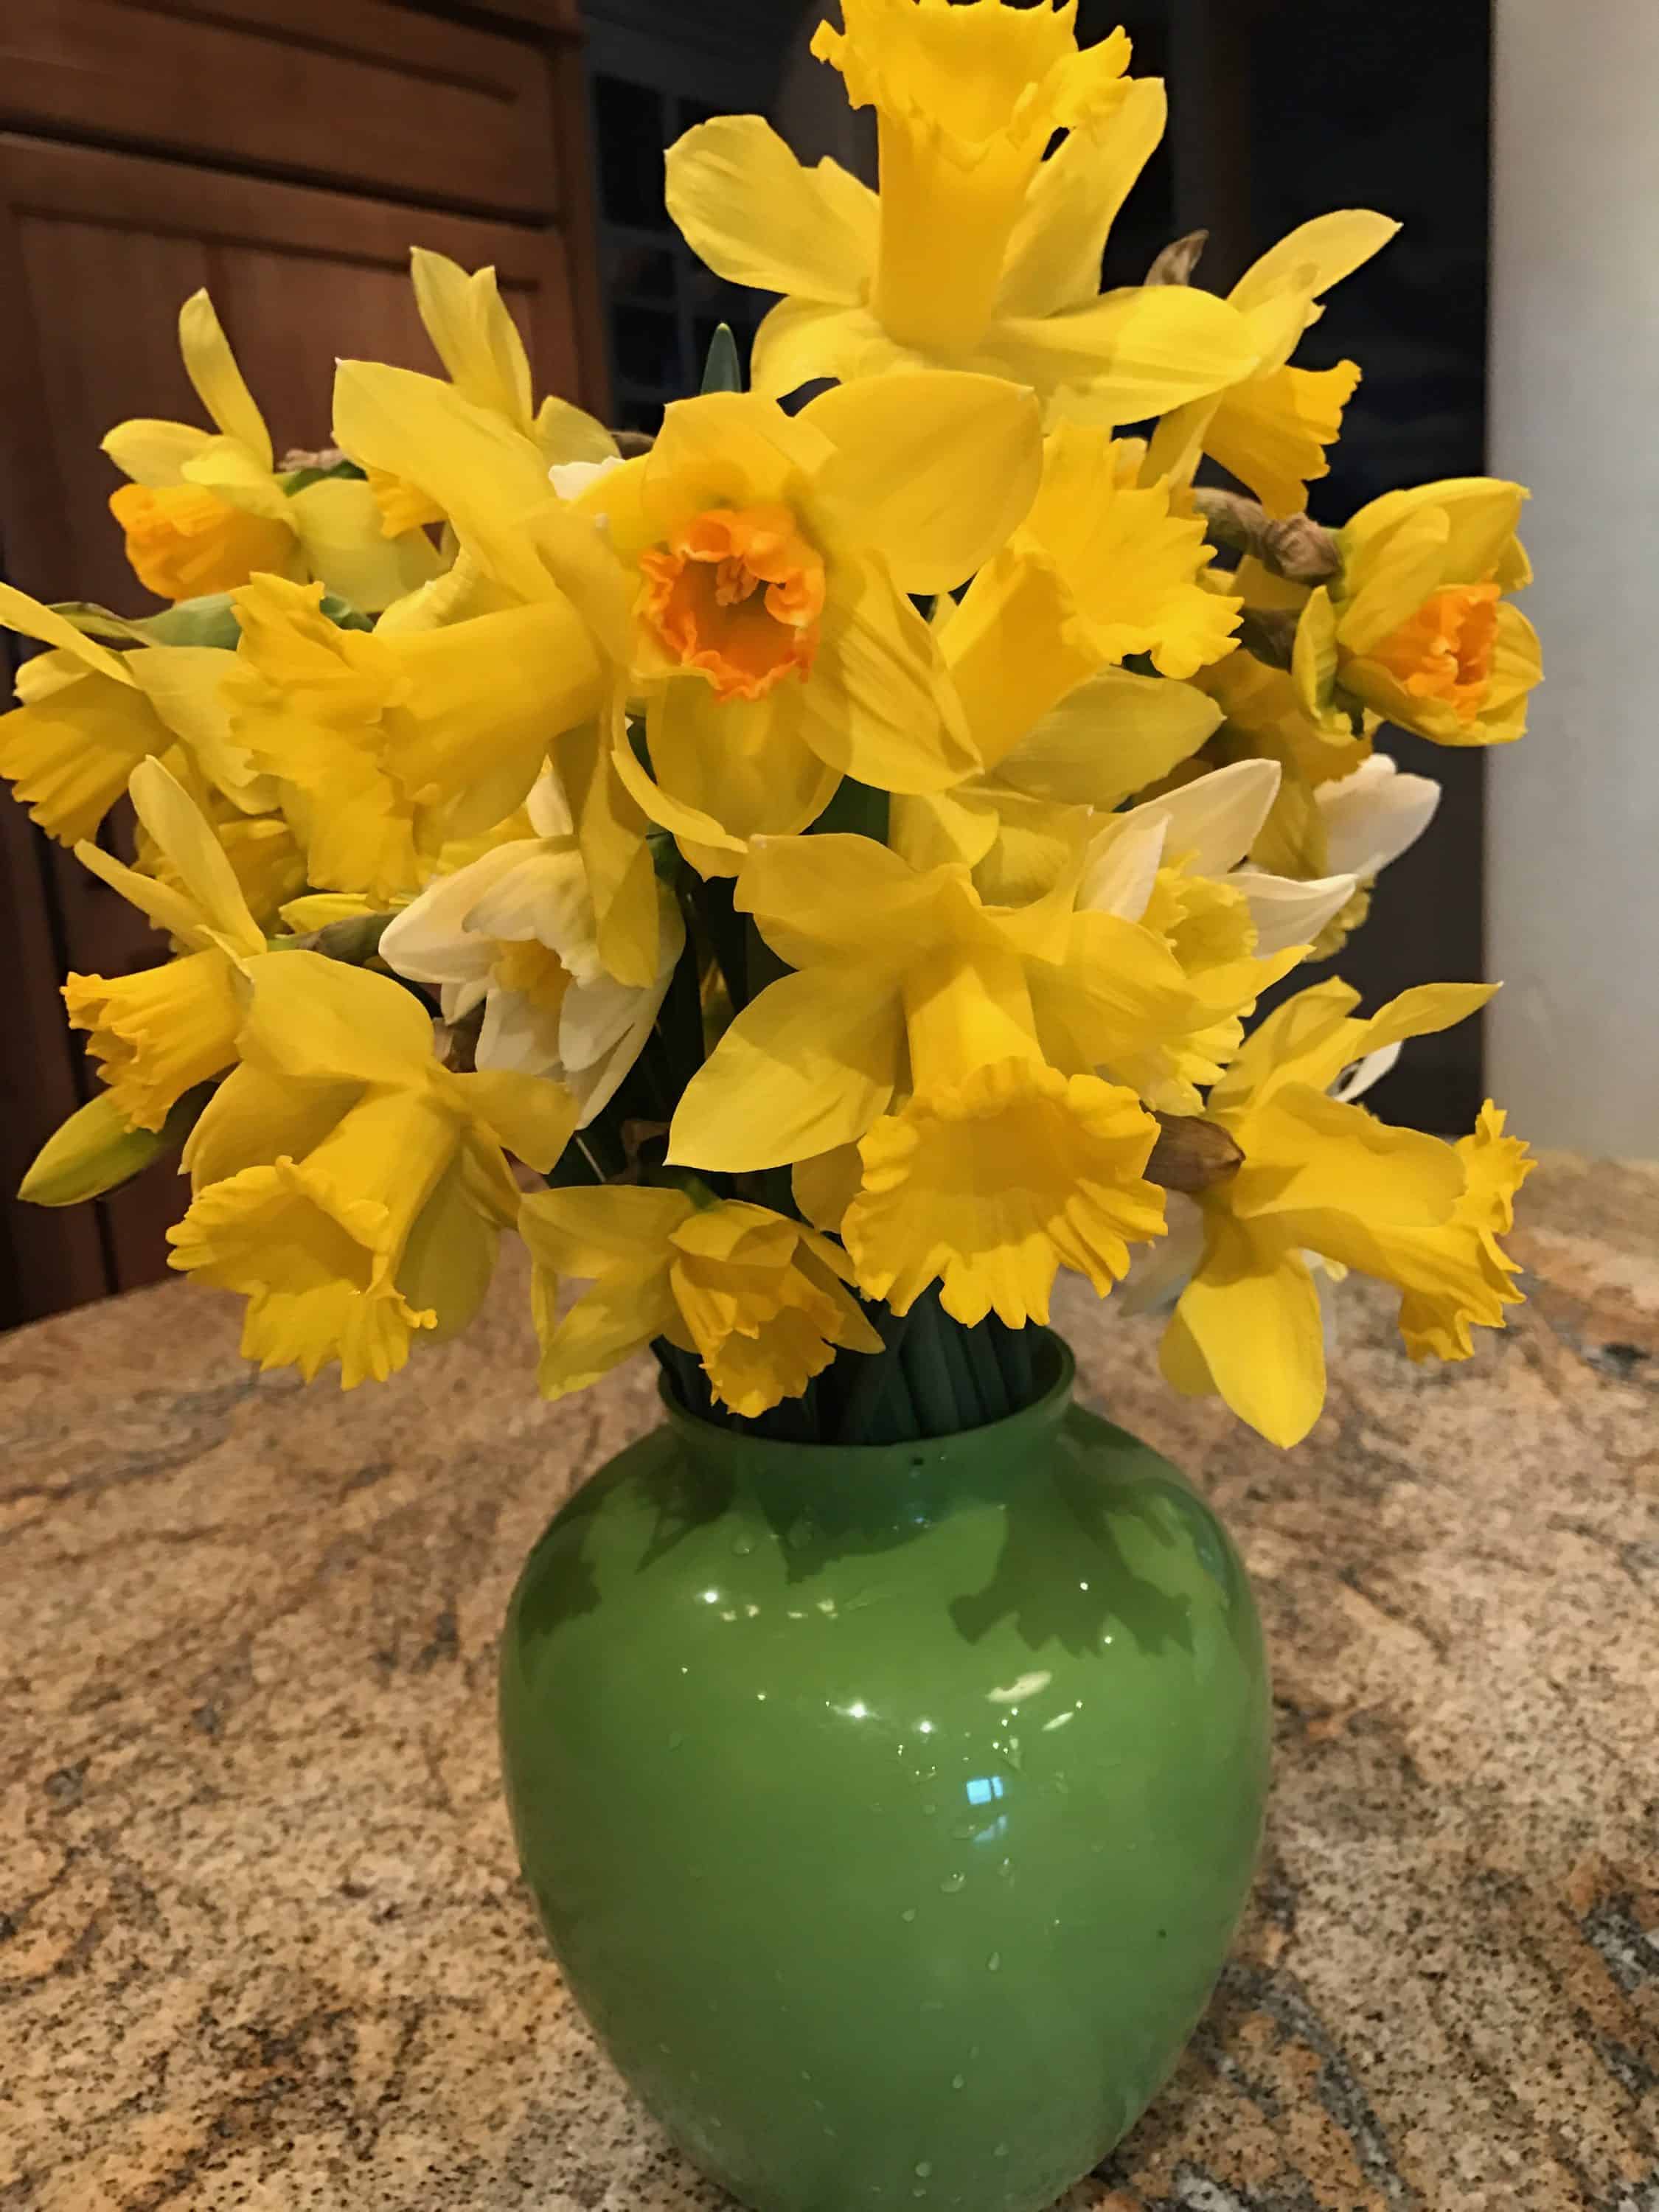 Bozeman-Daffodils